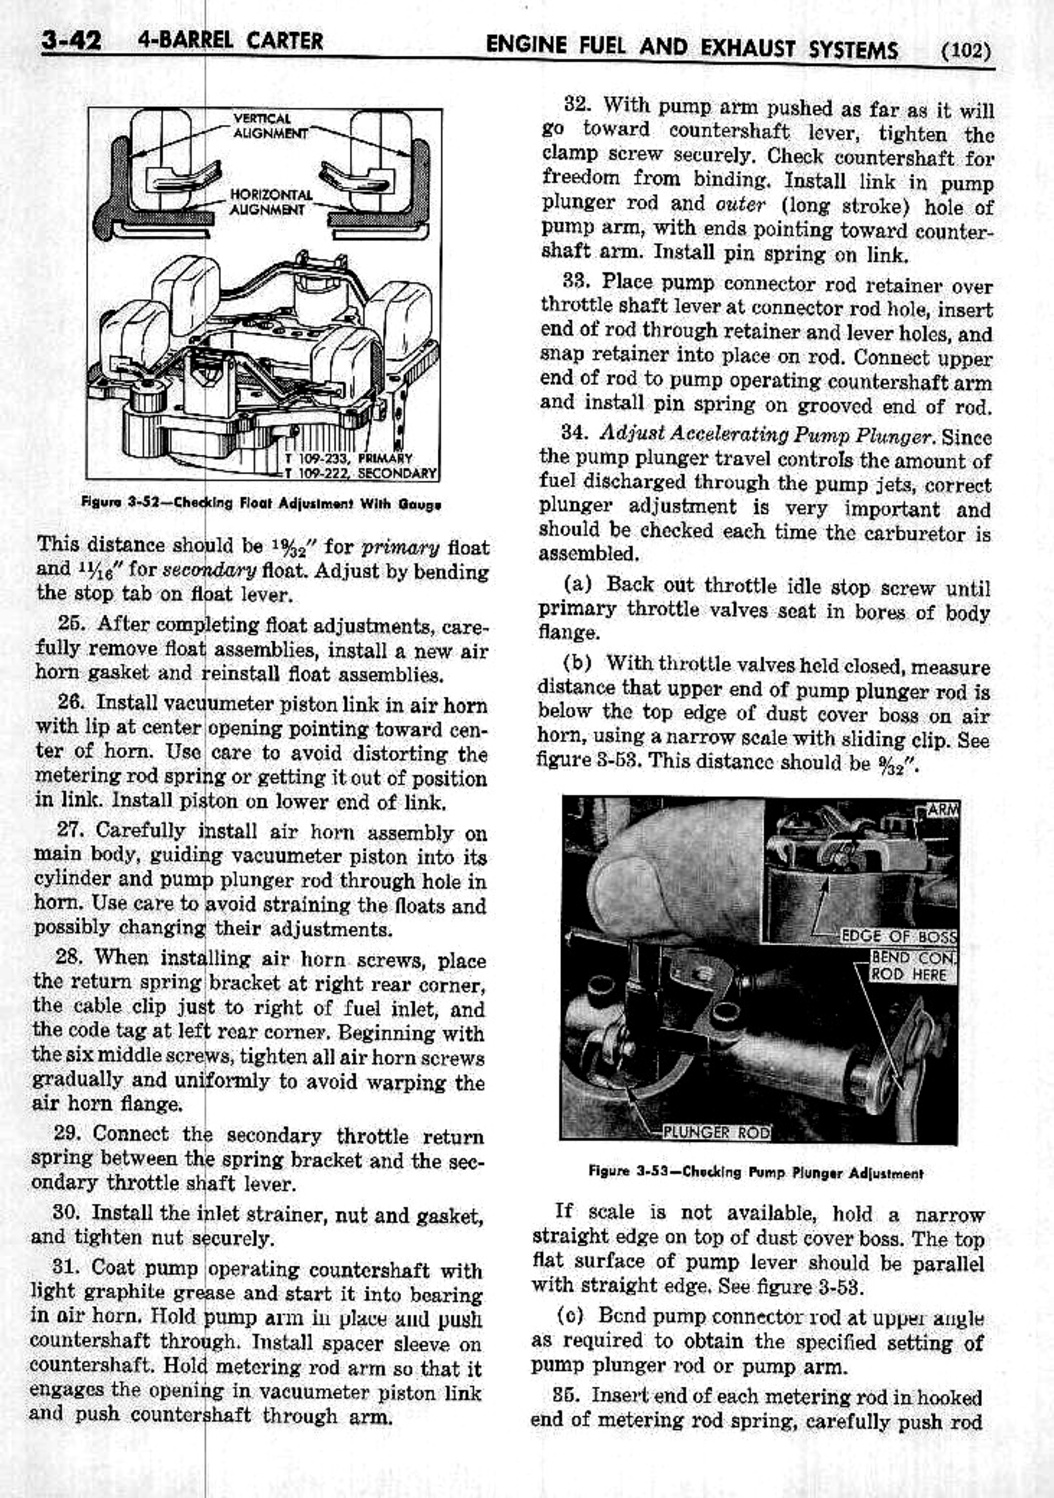 n_04 1953 Buick Shop Manual - Engine Fuel & Exhaust-042-042.jpg